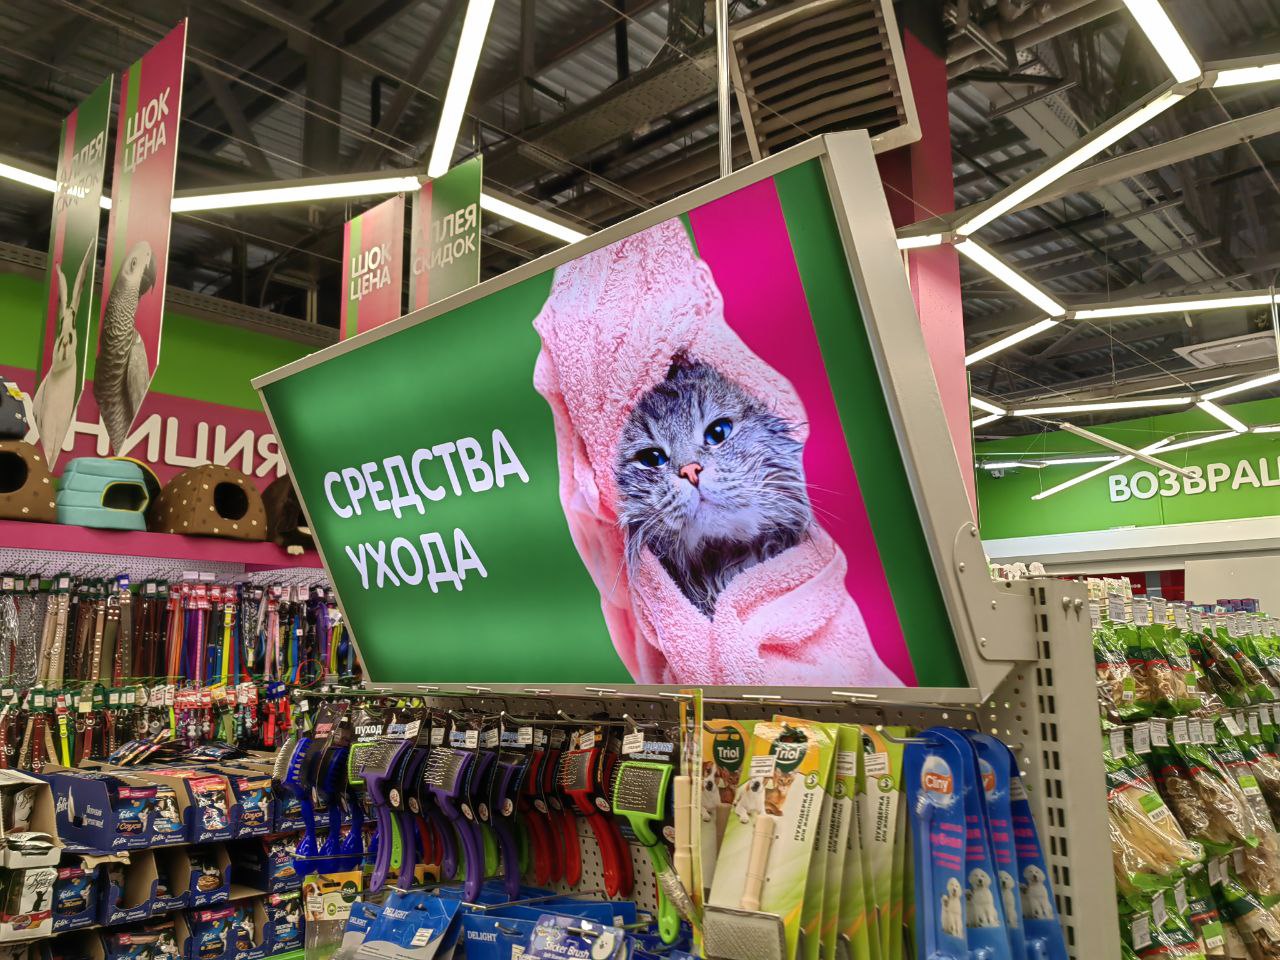 Фото: Наталья Марова/Retail.ru